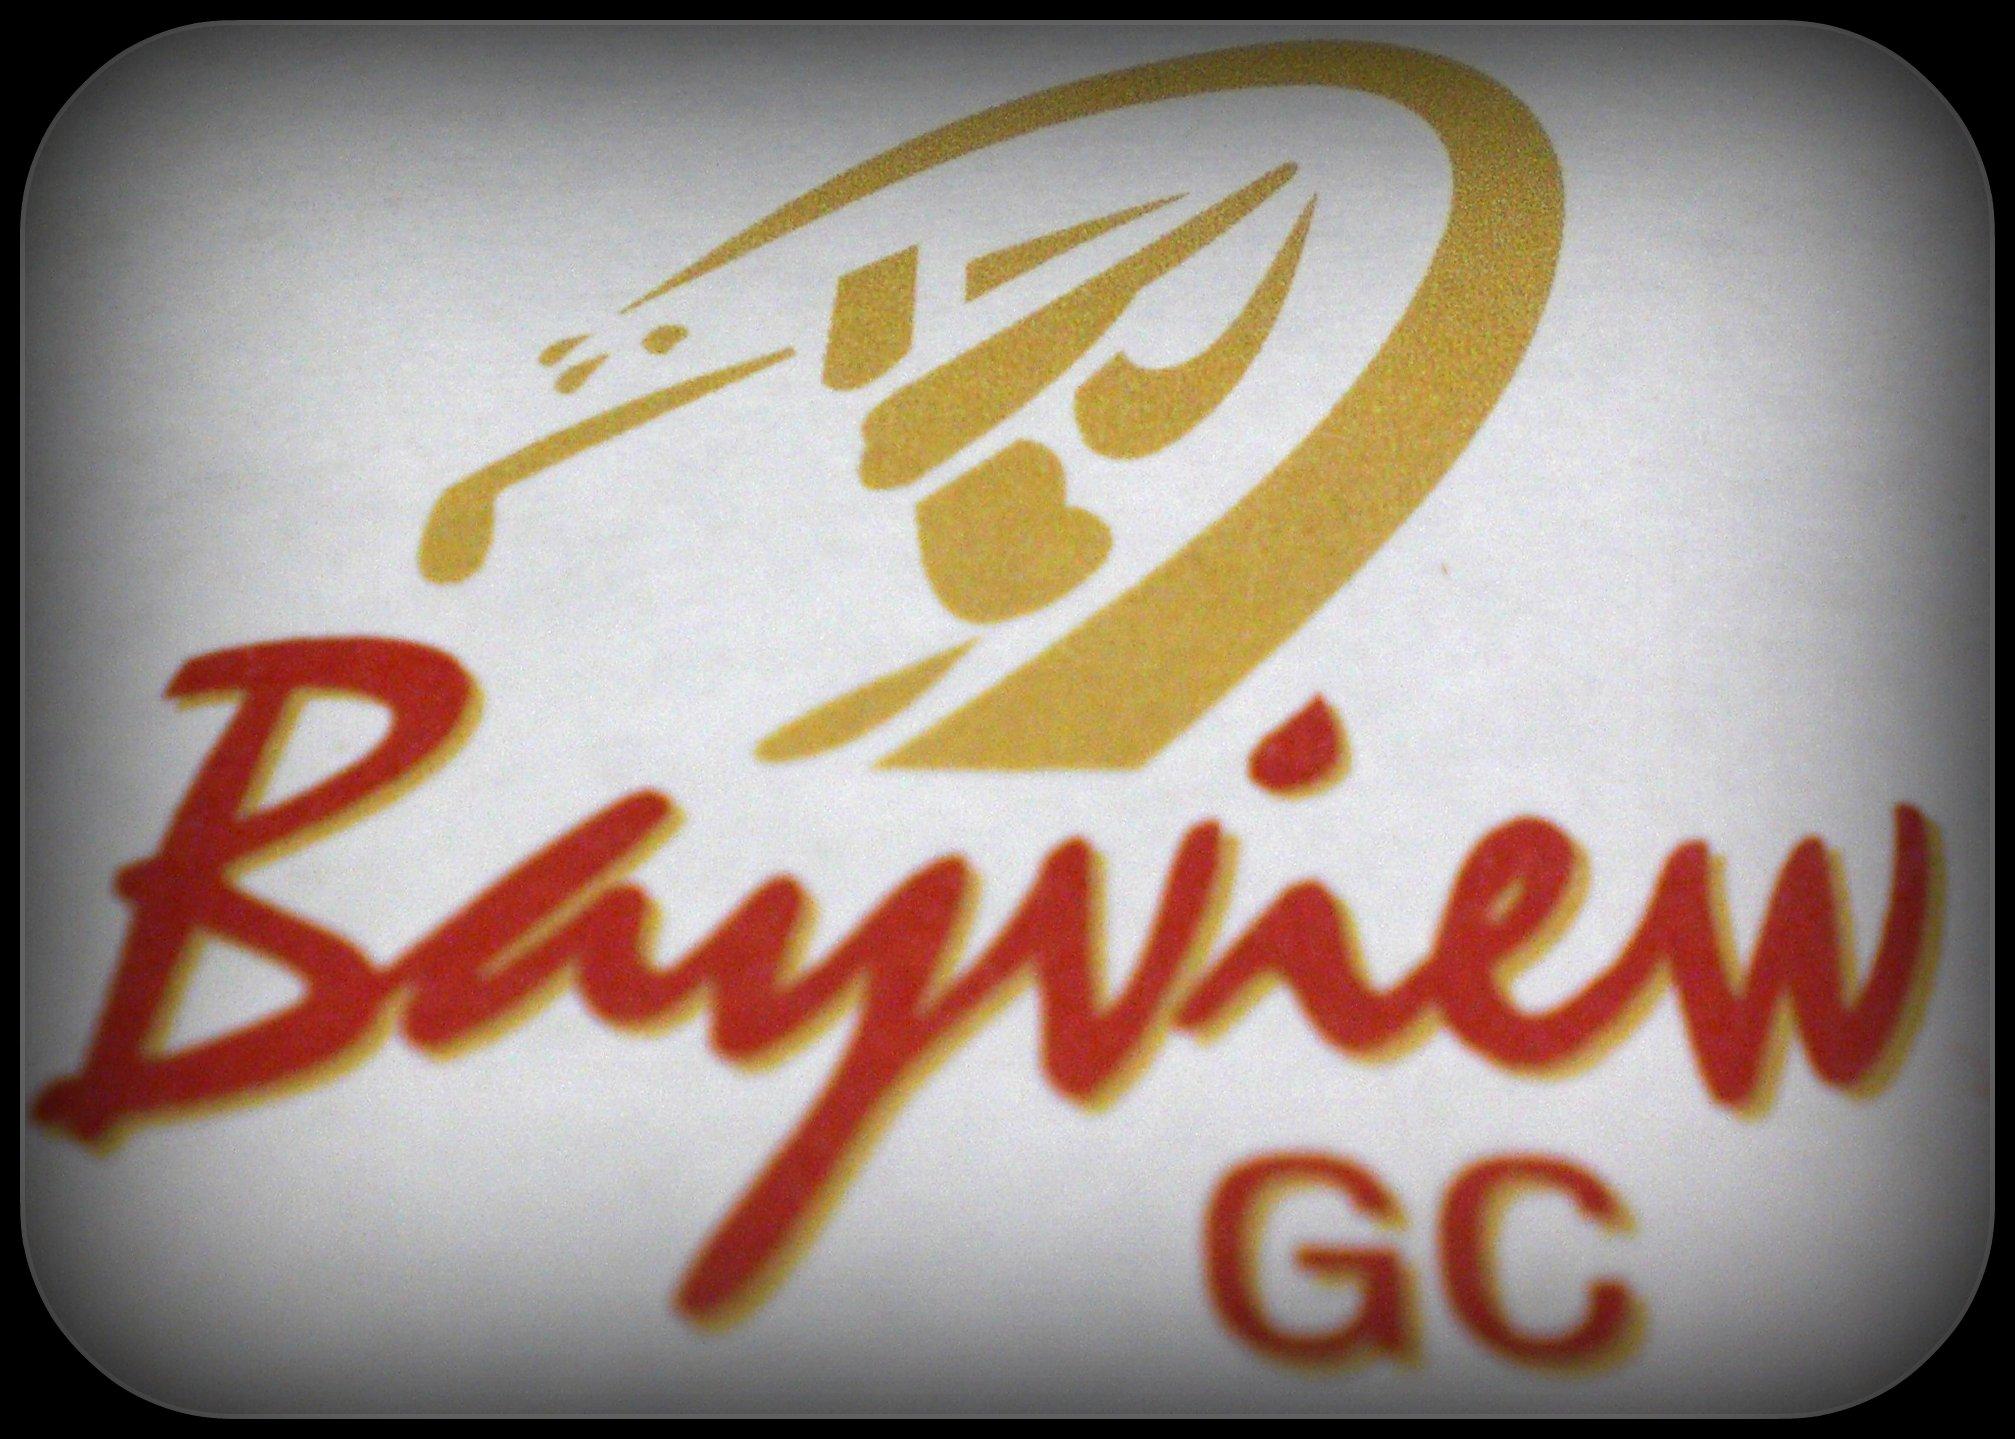 Bayview Golf Club